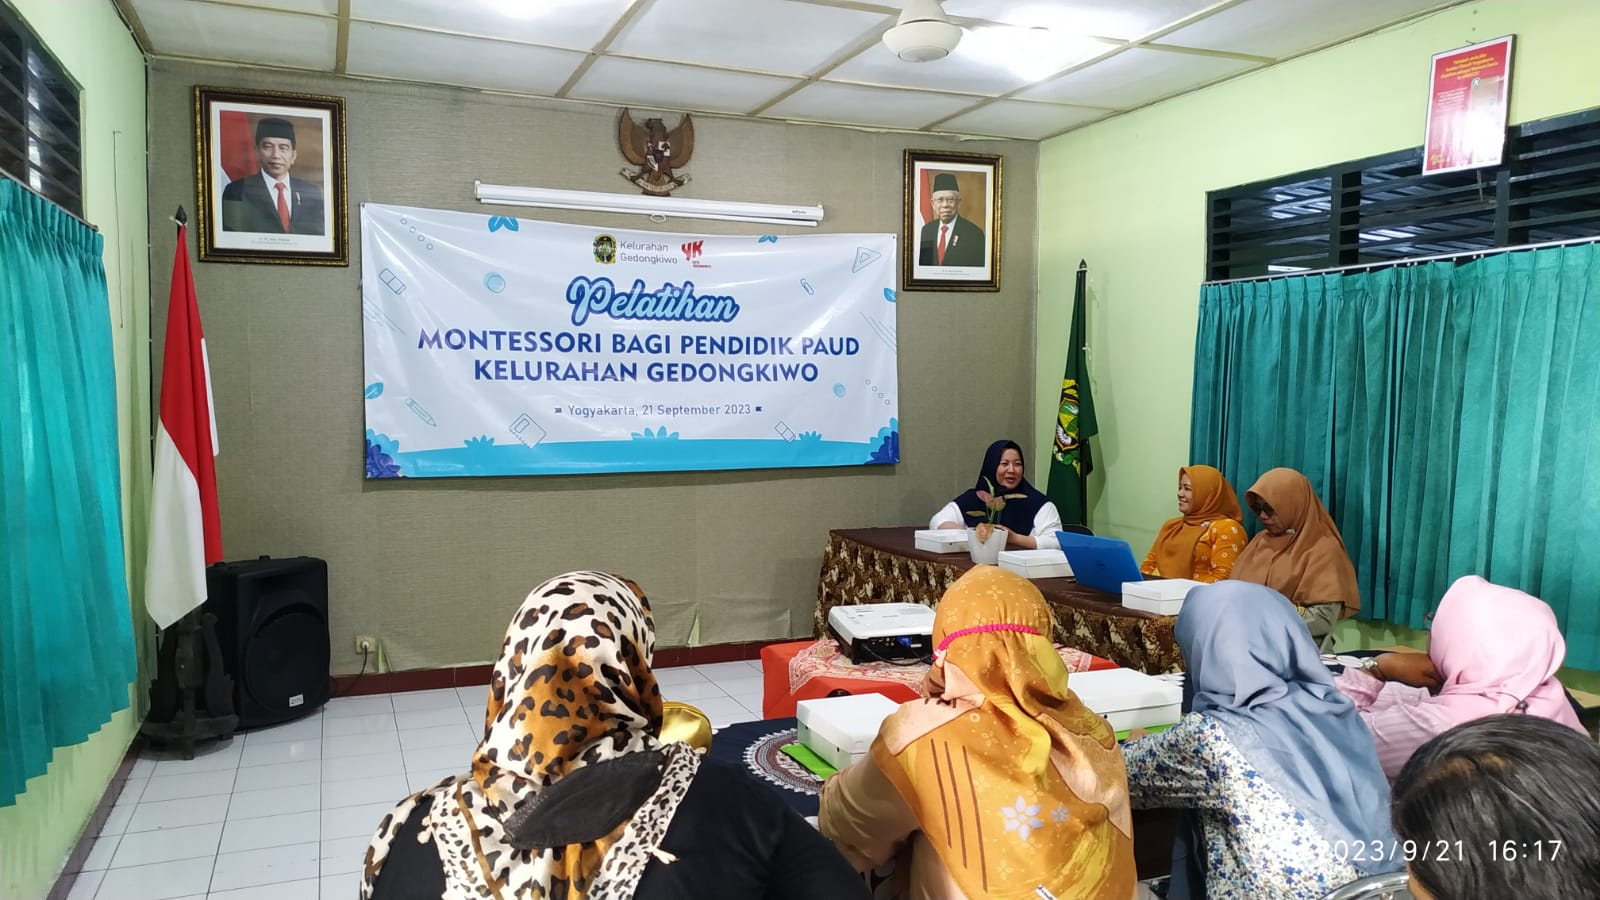 Pelatihan Montessori bagi Pendidik PAUD di Kelurahan Gedongkiwo